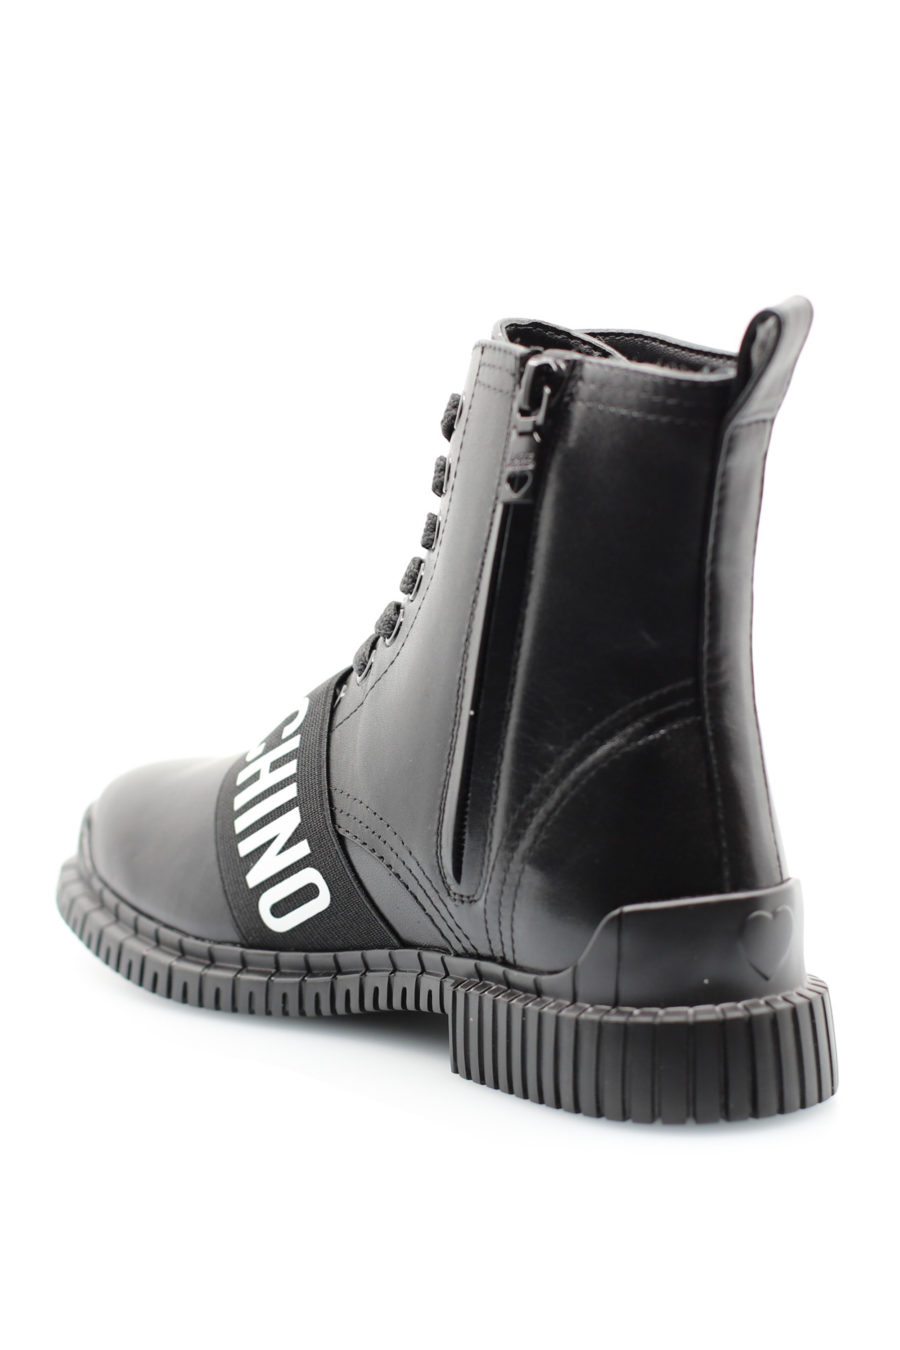 Black ankle boots with large logo - 4add1507aa691599c1a72bd1eb826b3afada059e